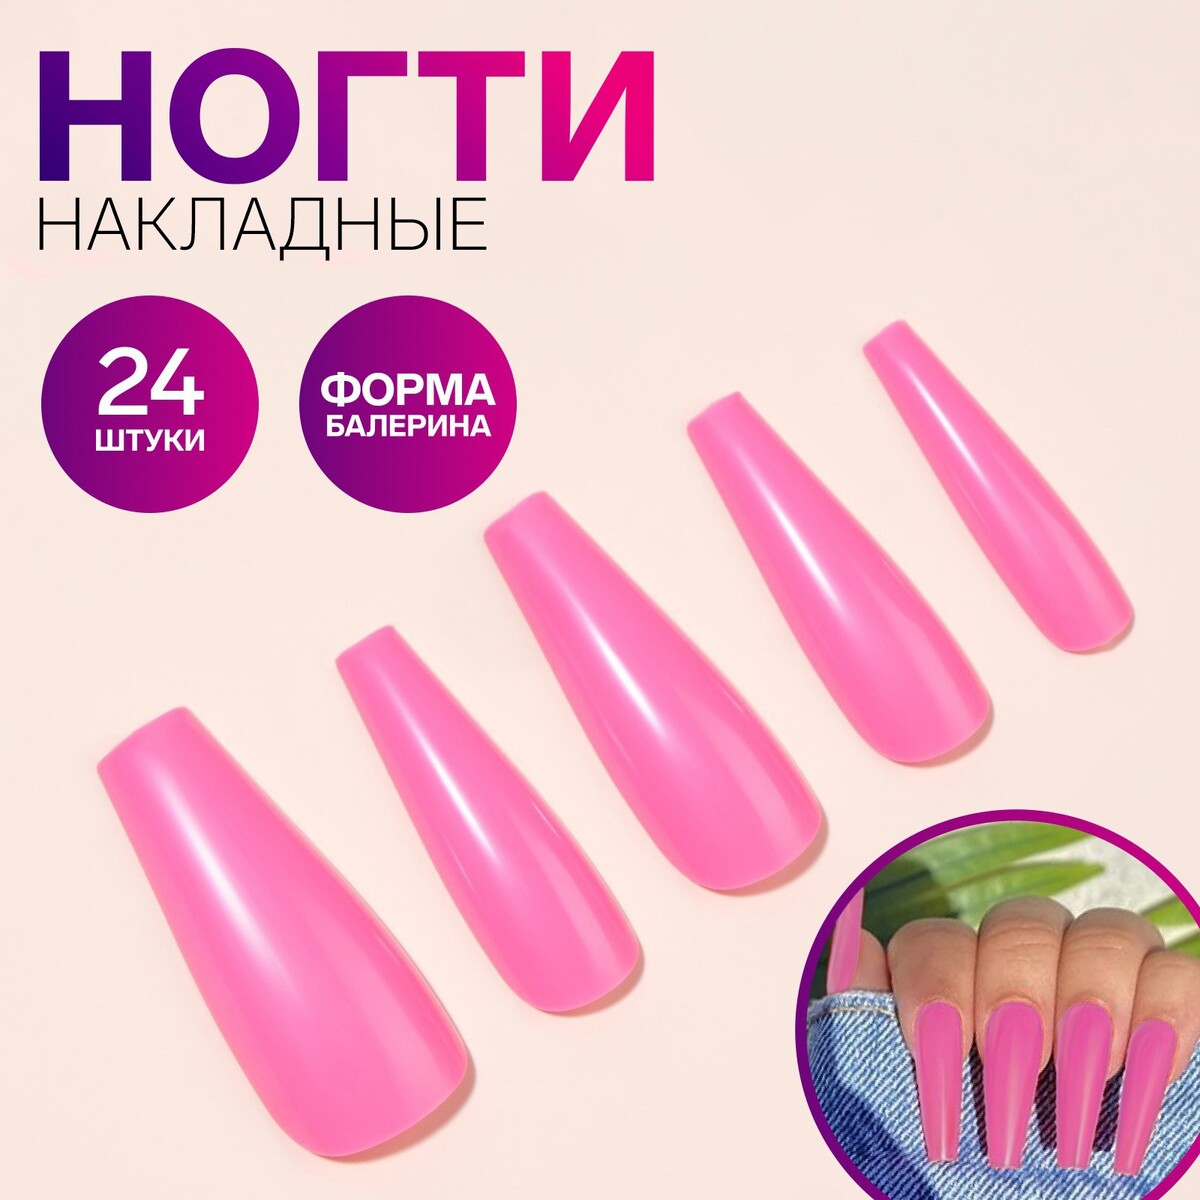 Накладные ногти, 24 шт, форма балерина, цвет розовый балерина